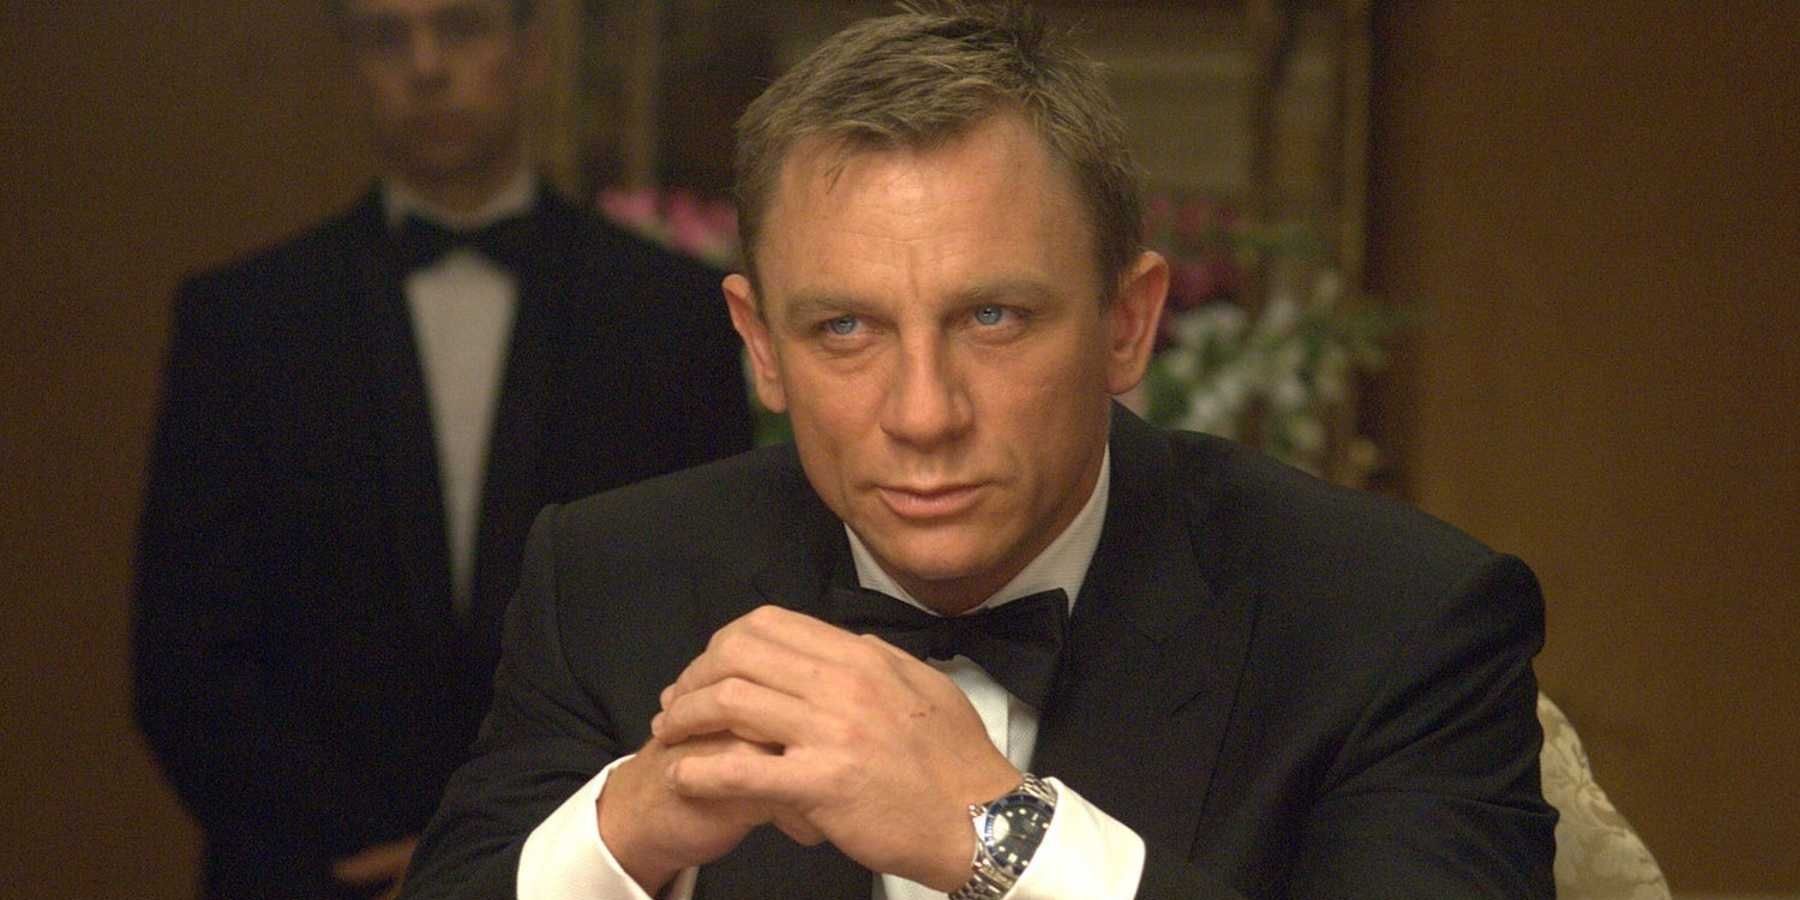 Daniel Craig as James Bond playing poker in Casino Royale